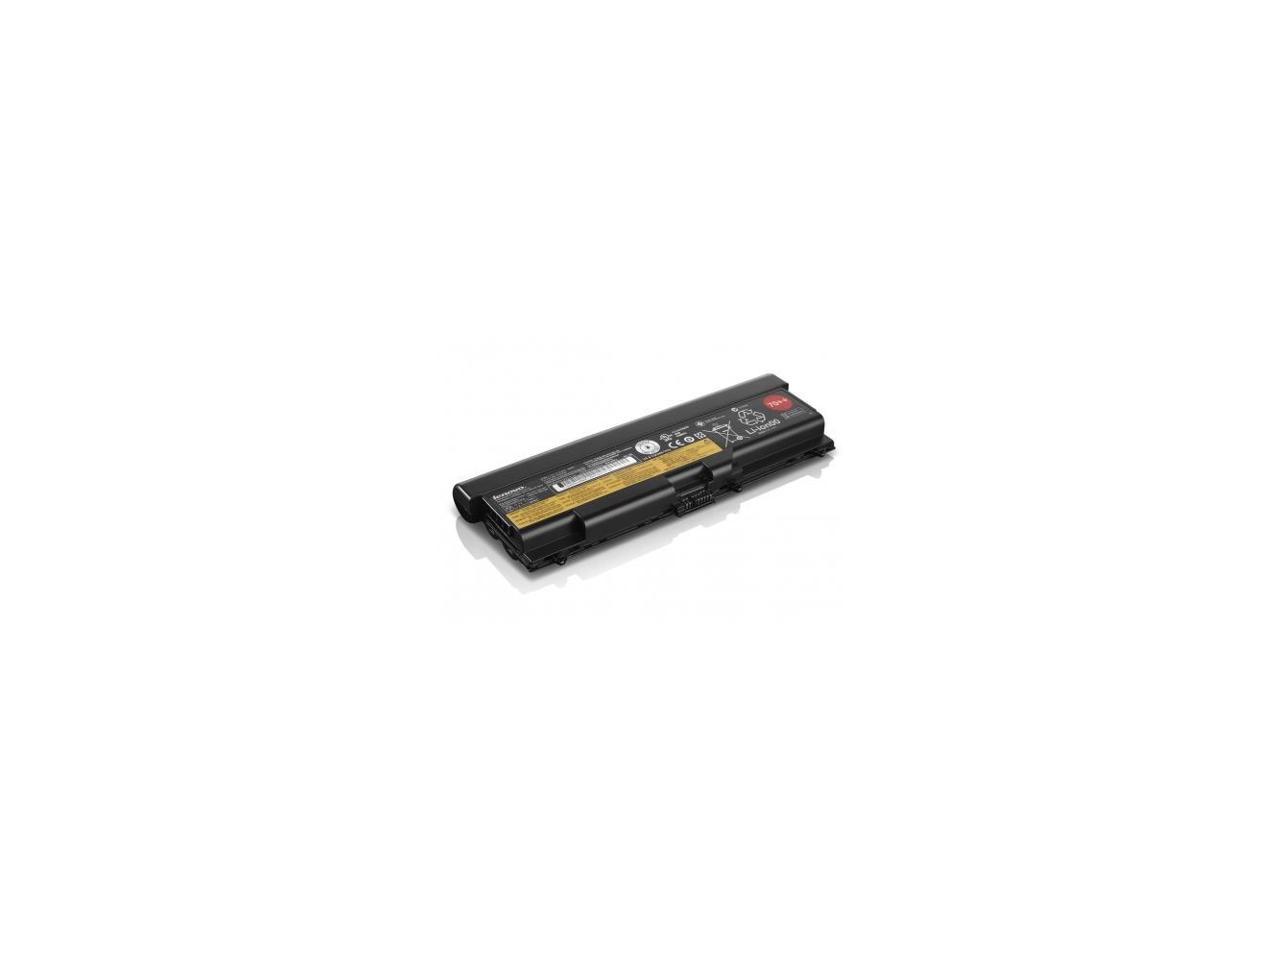 Lenovo 45N1009 ThinkPad Battery 70++ (9 Cell)